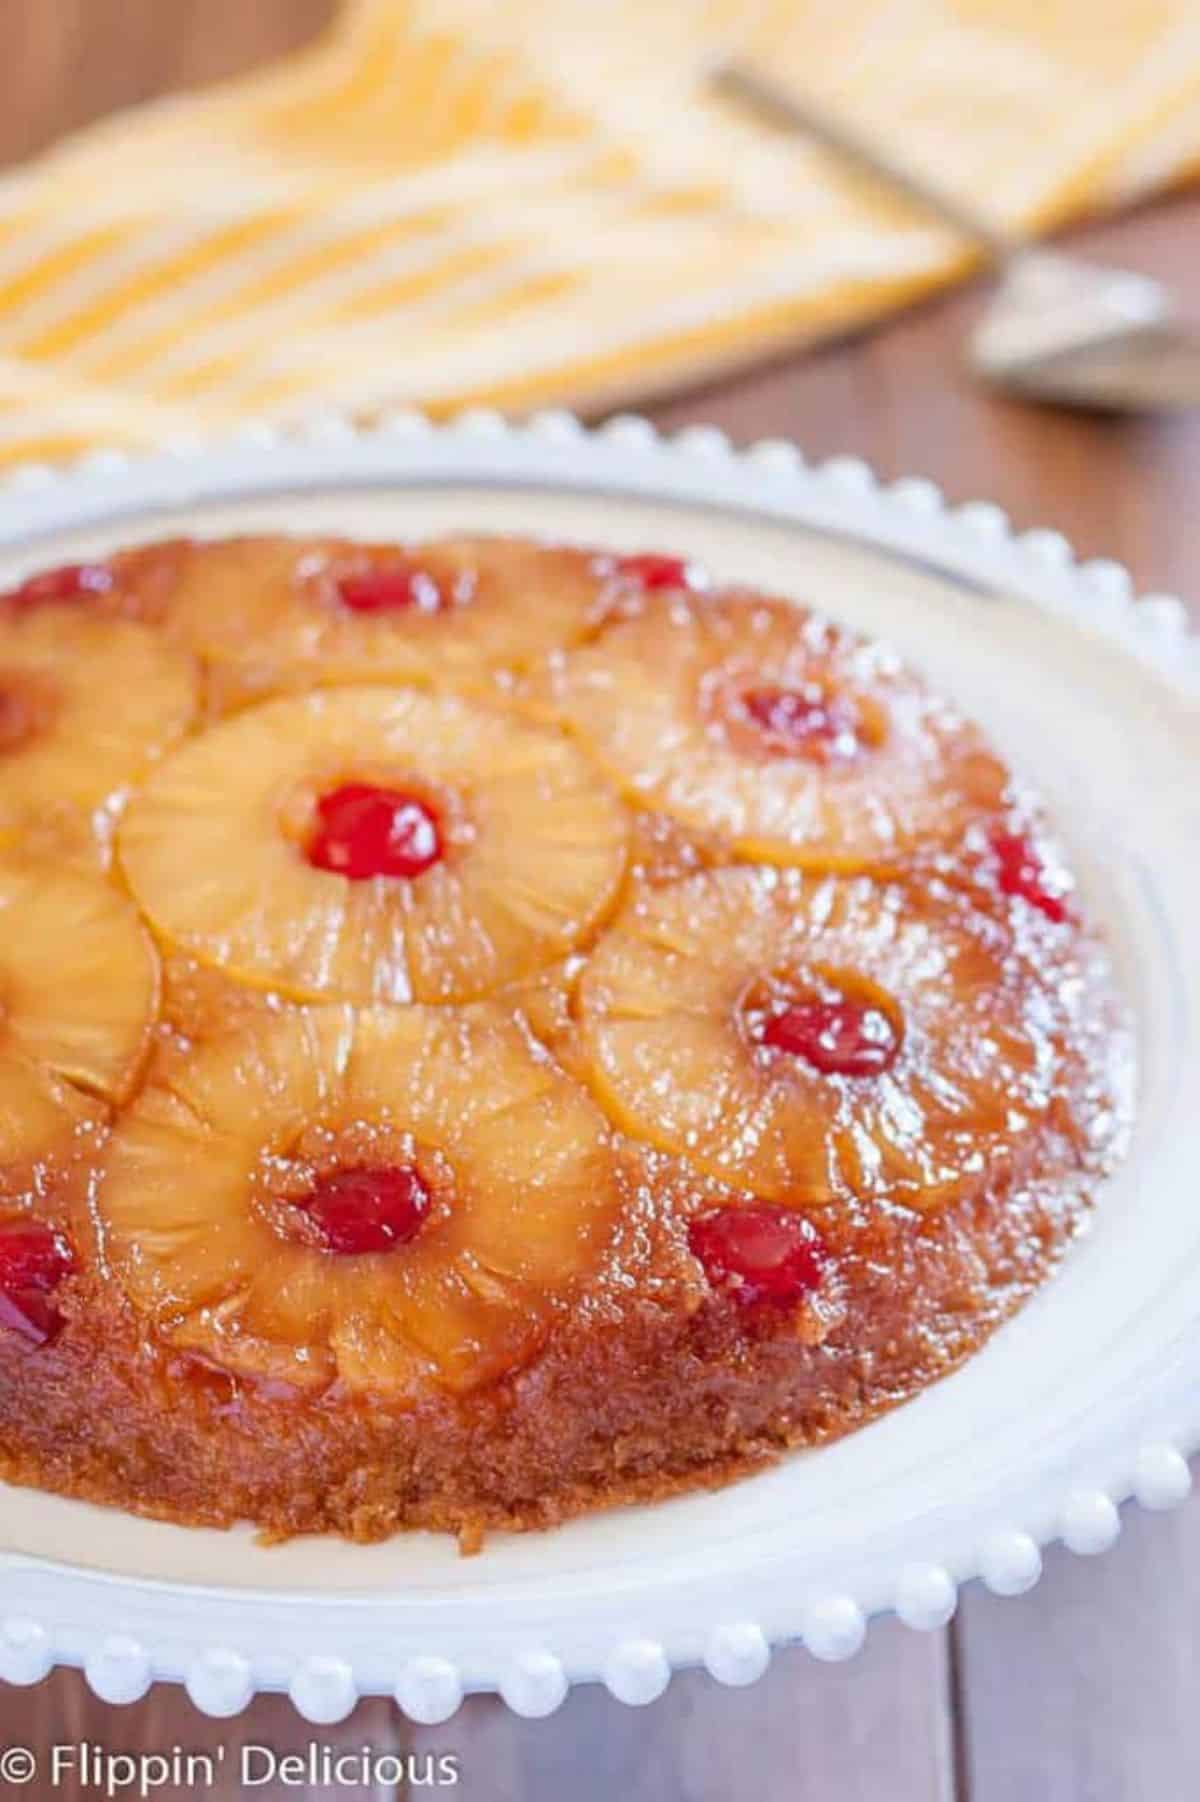 Yummy Gluten-Free Pineapple Upside-Down Cake on a cake tray.